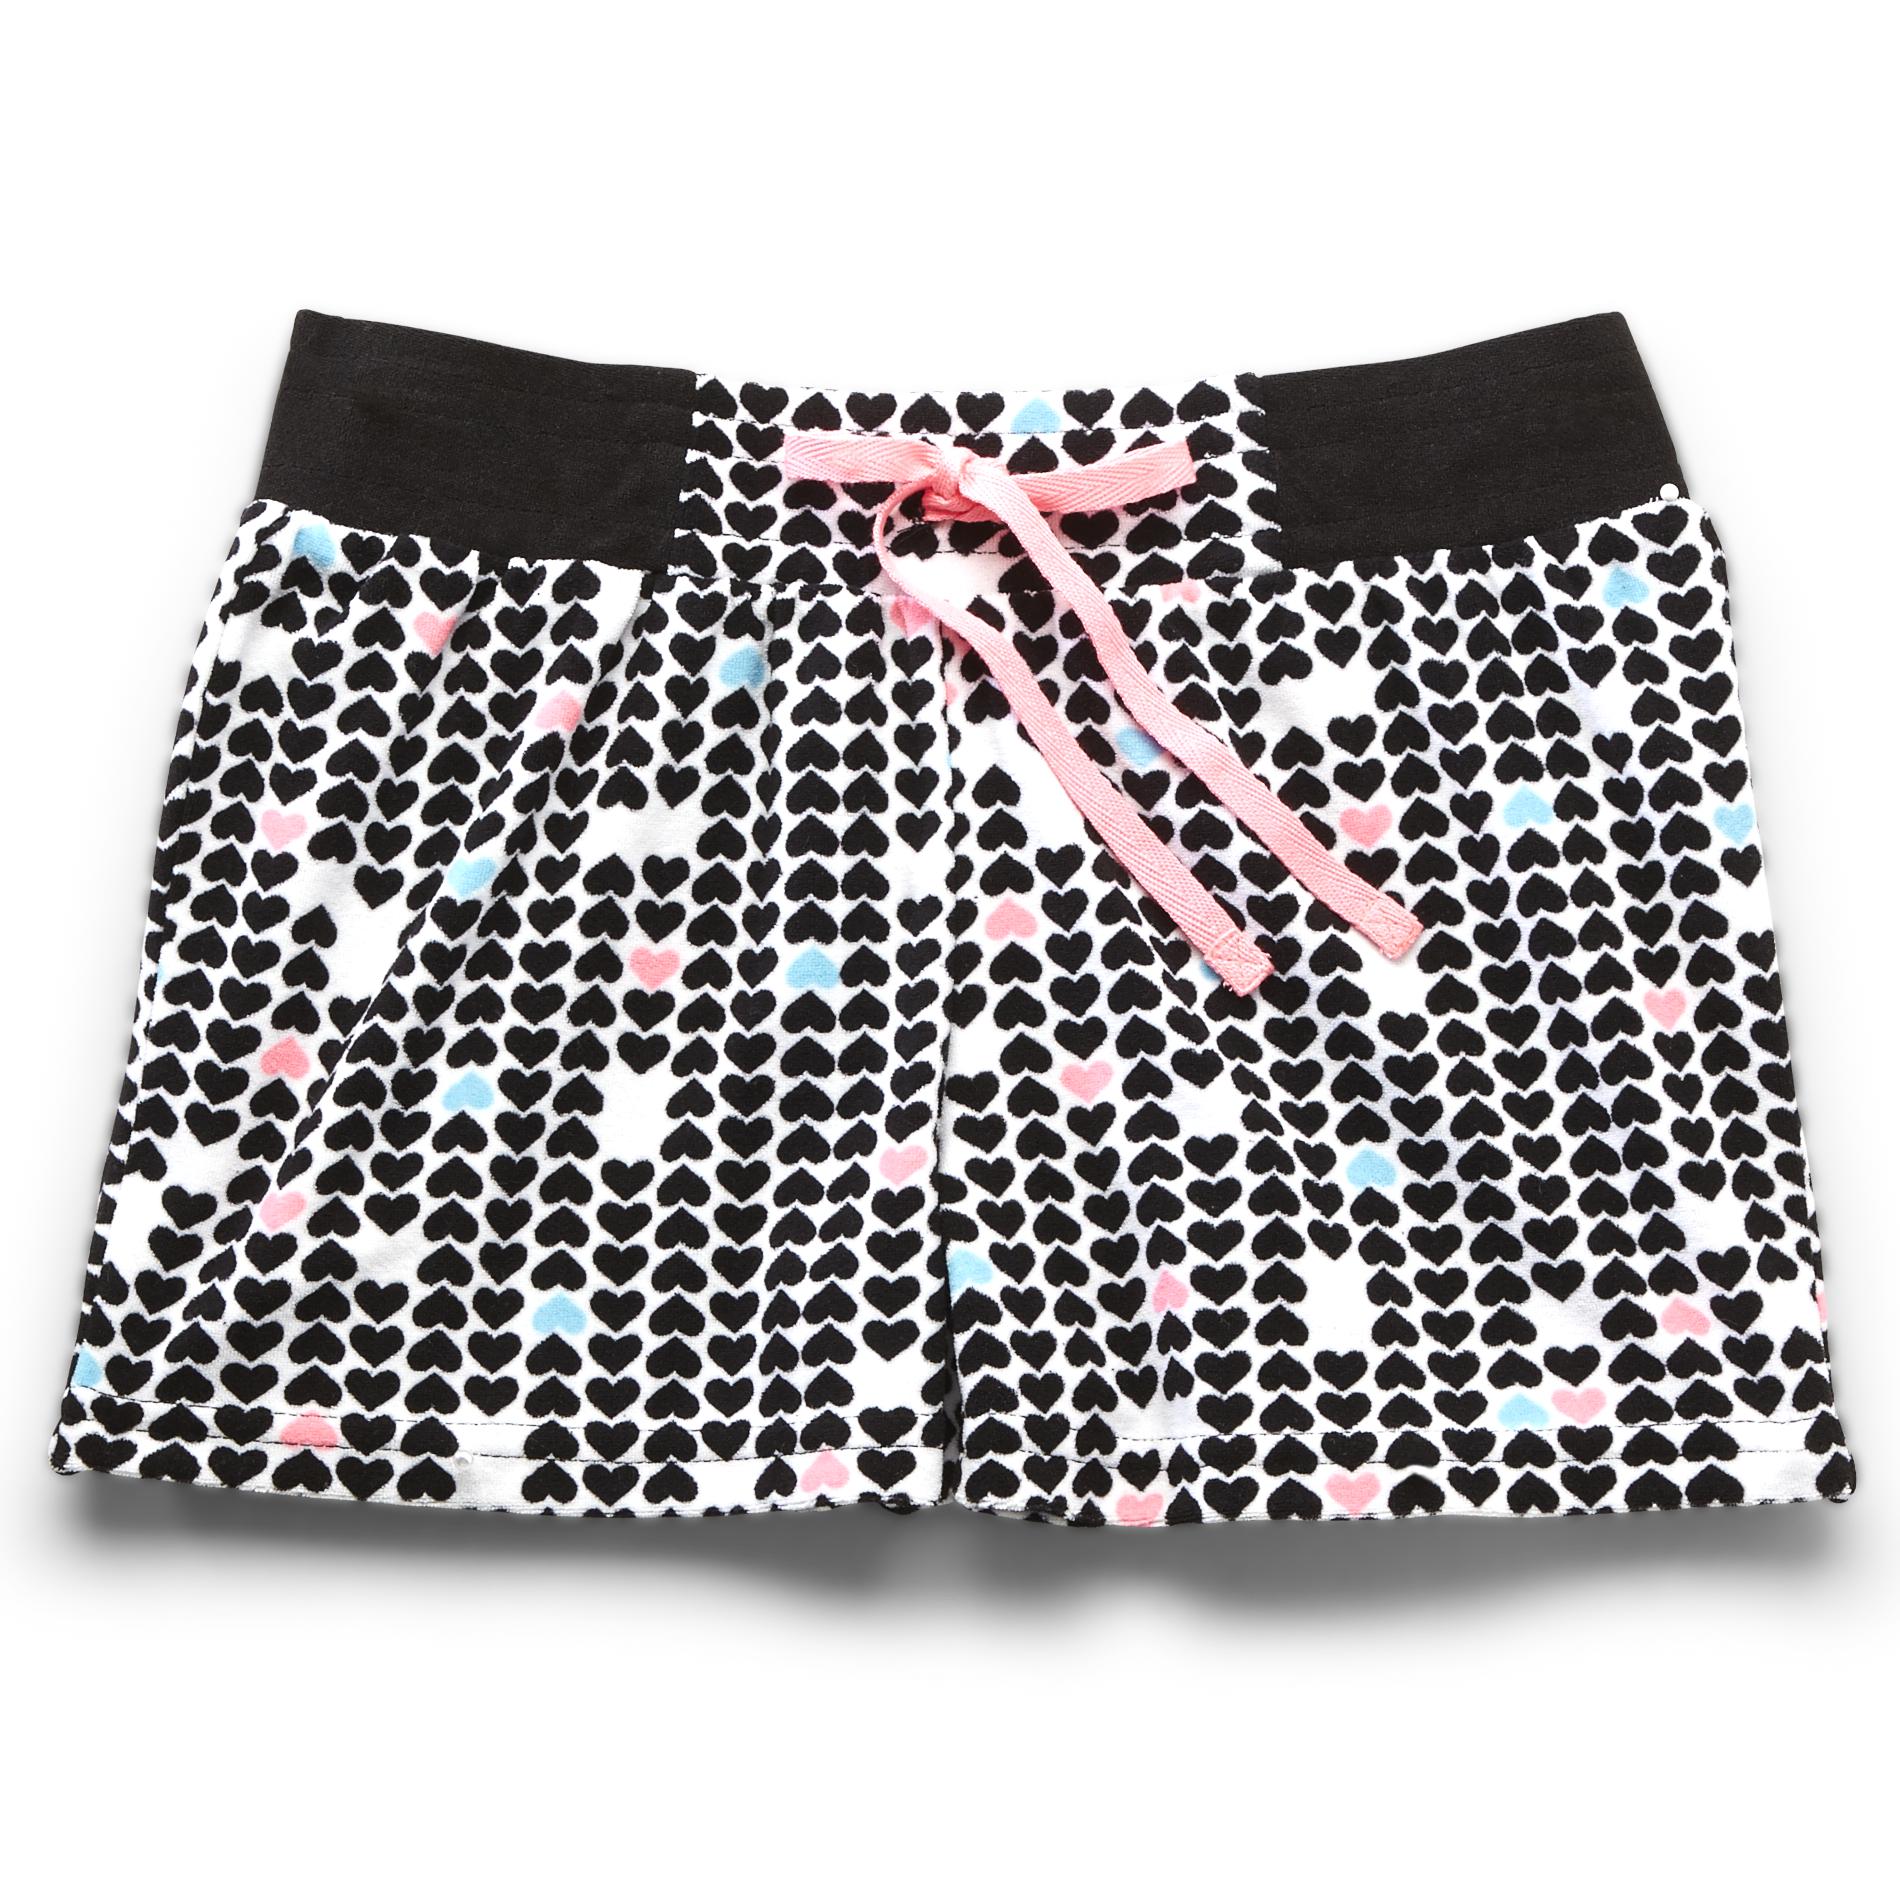 Joe Boxer Women's Microterry Pajama Shorts - Heart Print